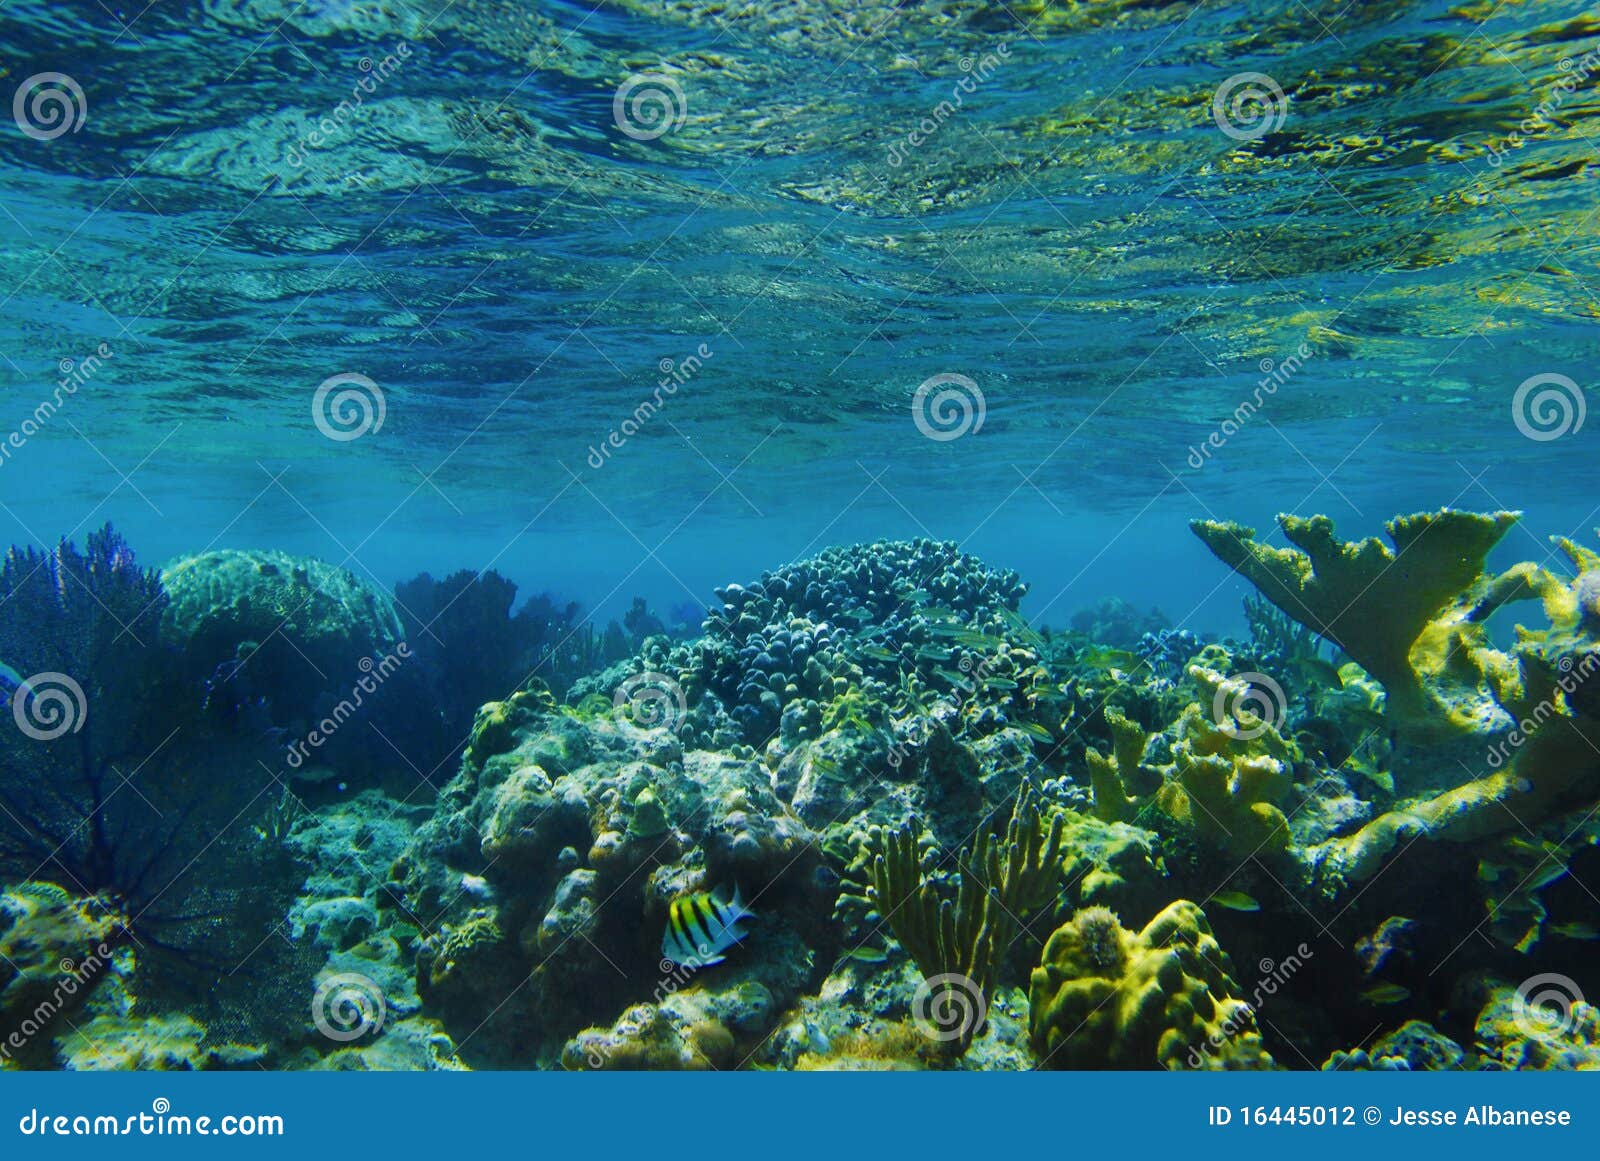 underwater coral